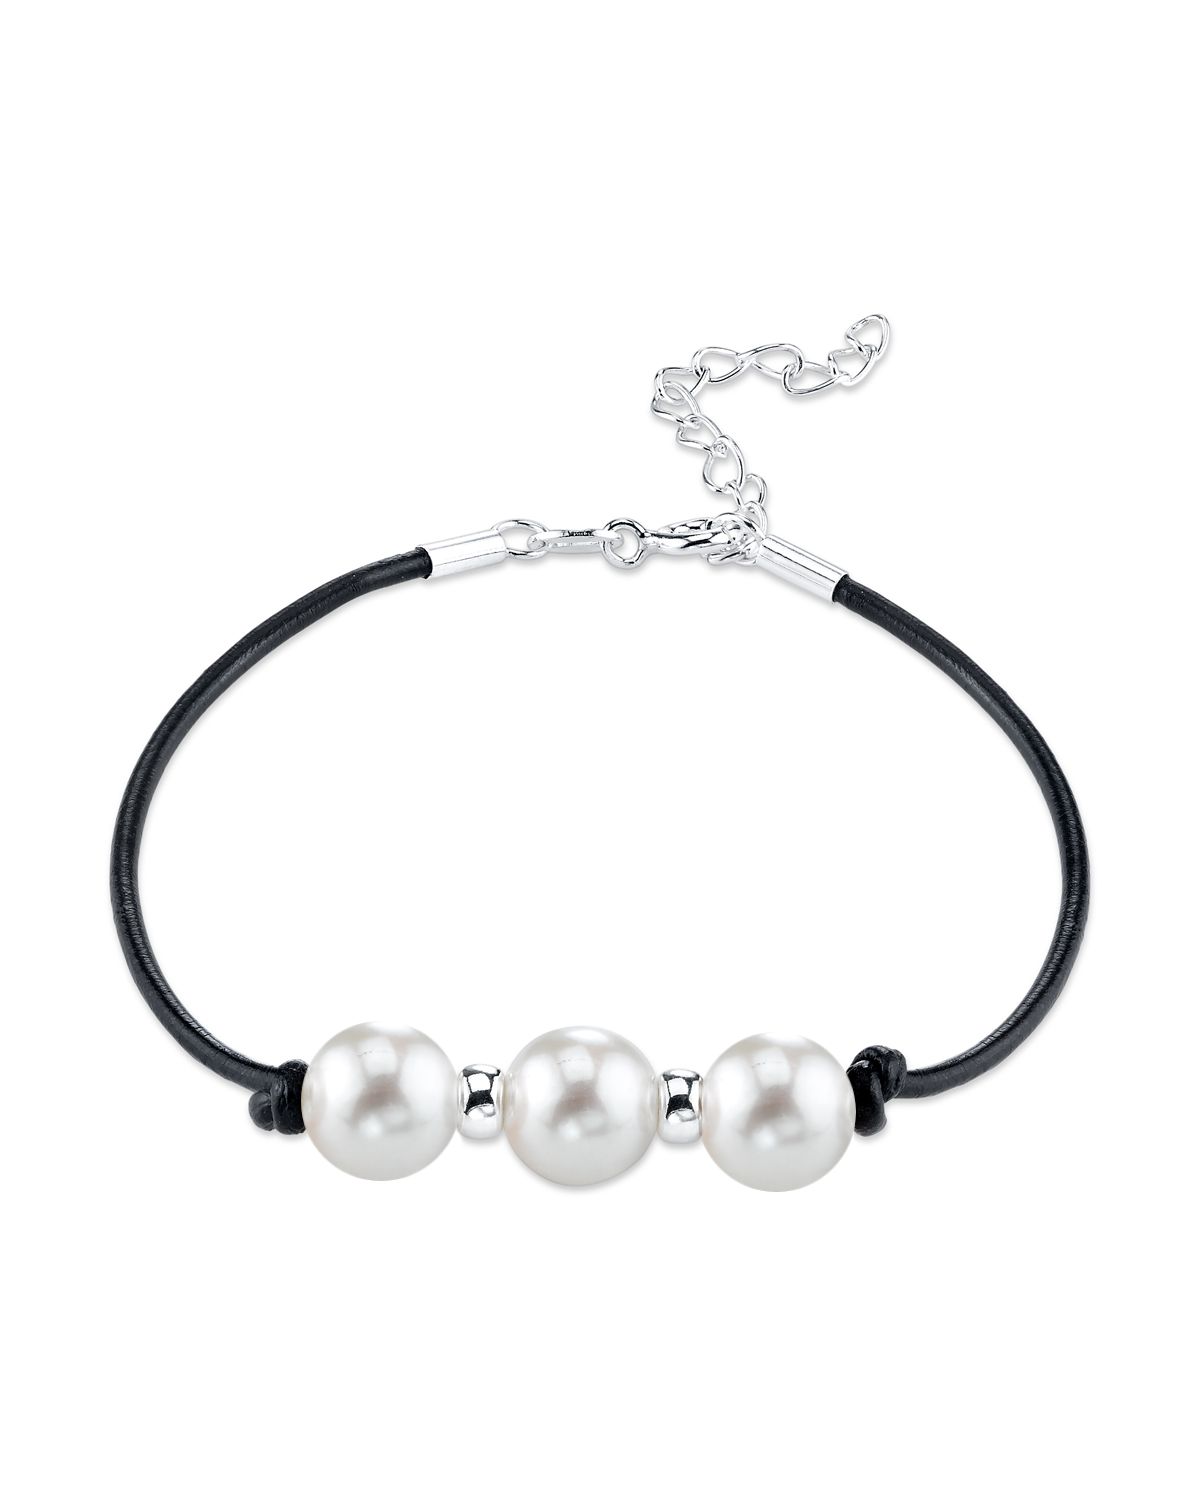 8mm White Freshwater Pearl & Silver Rondelle Leather Bracelet